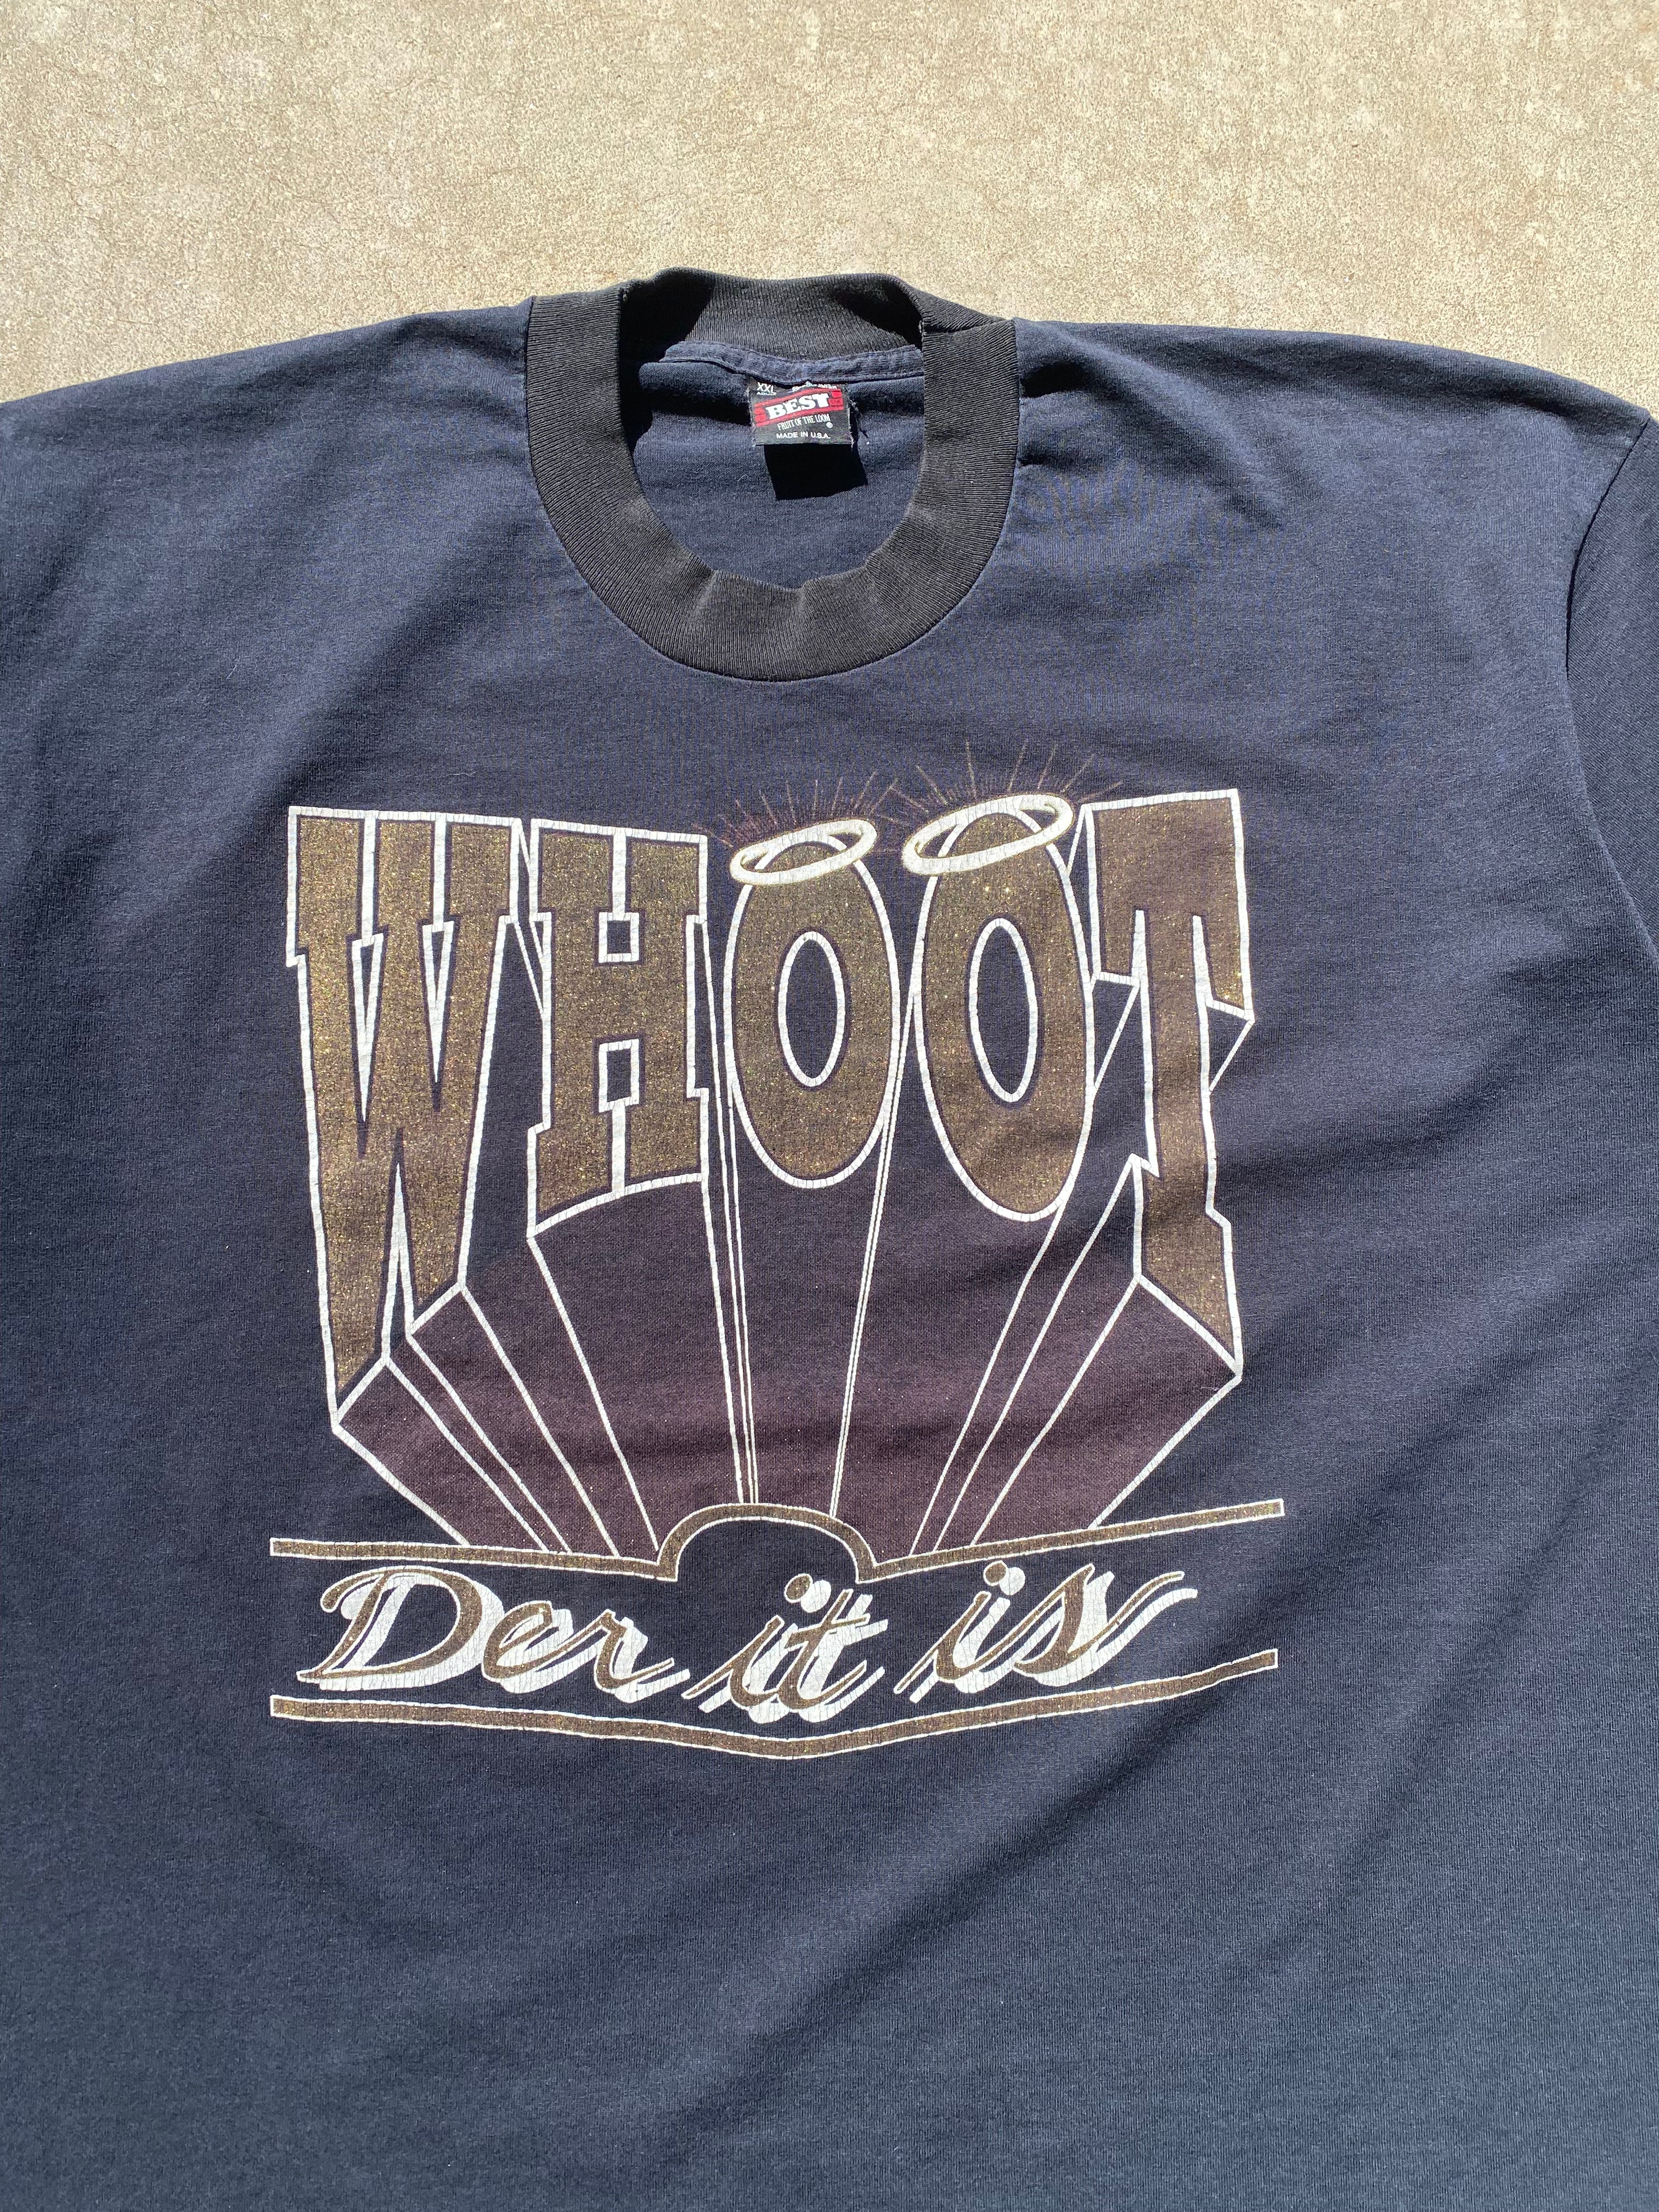 1990s Whoot Der It Is T-Shirt (XXL)